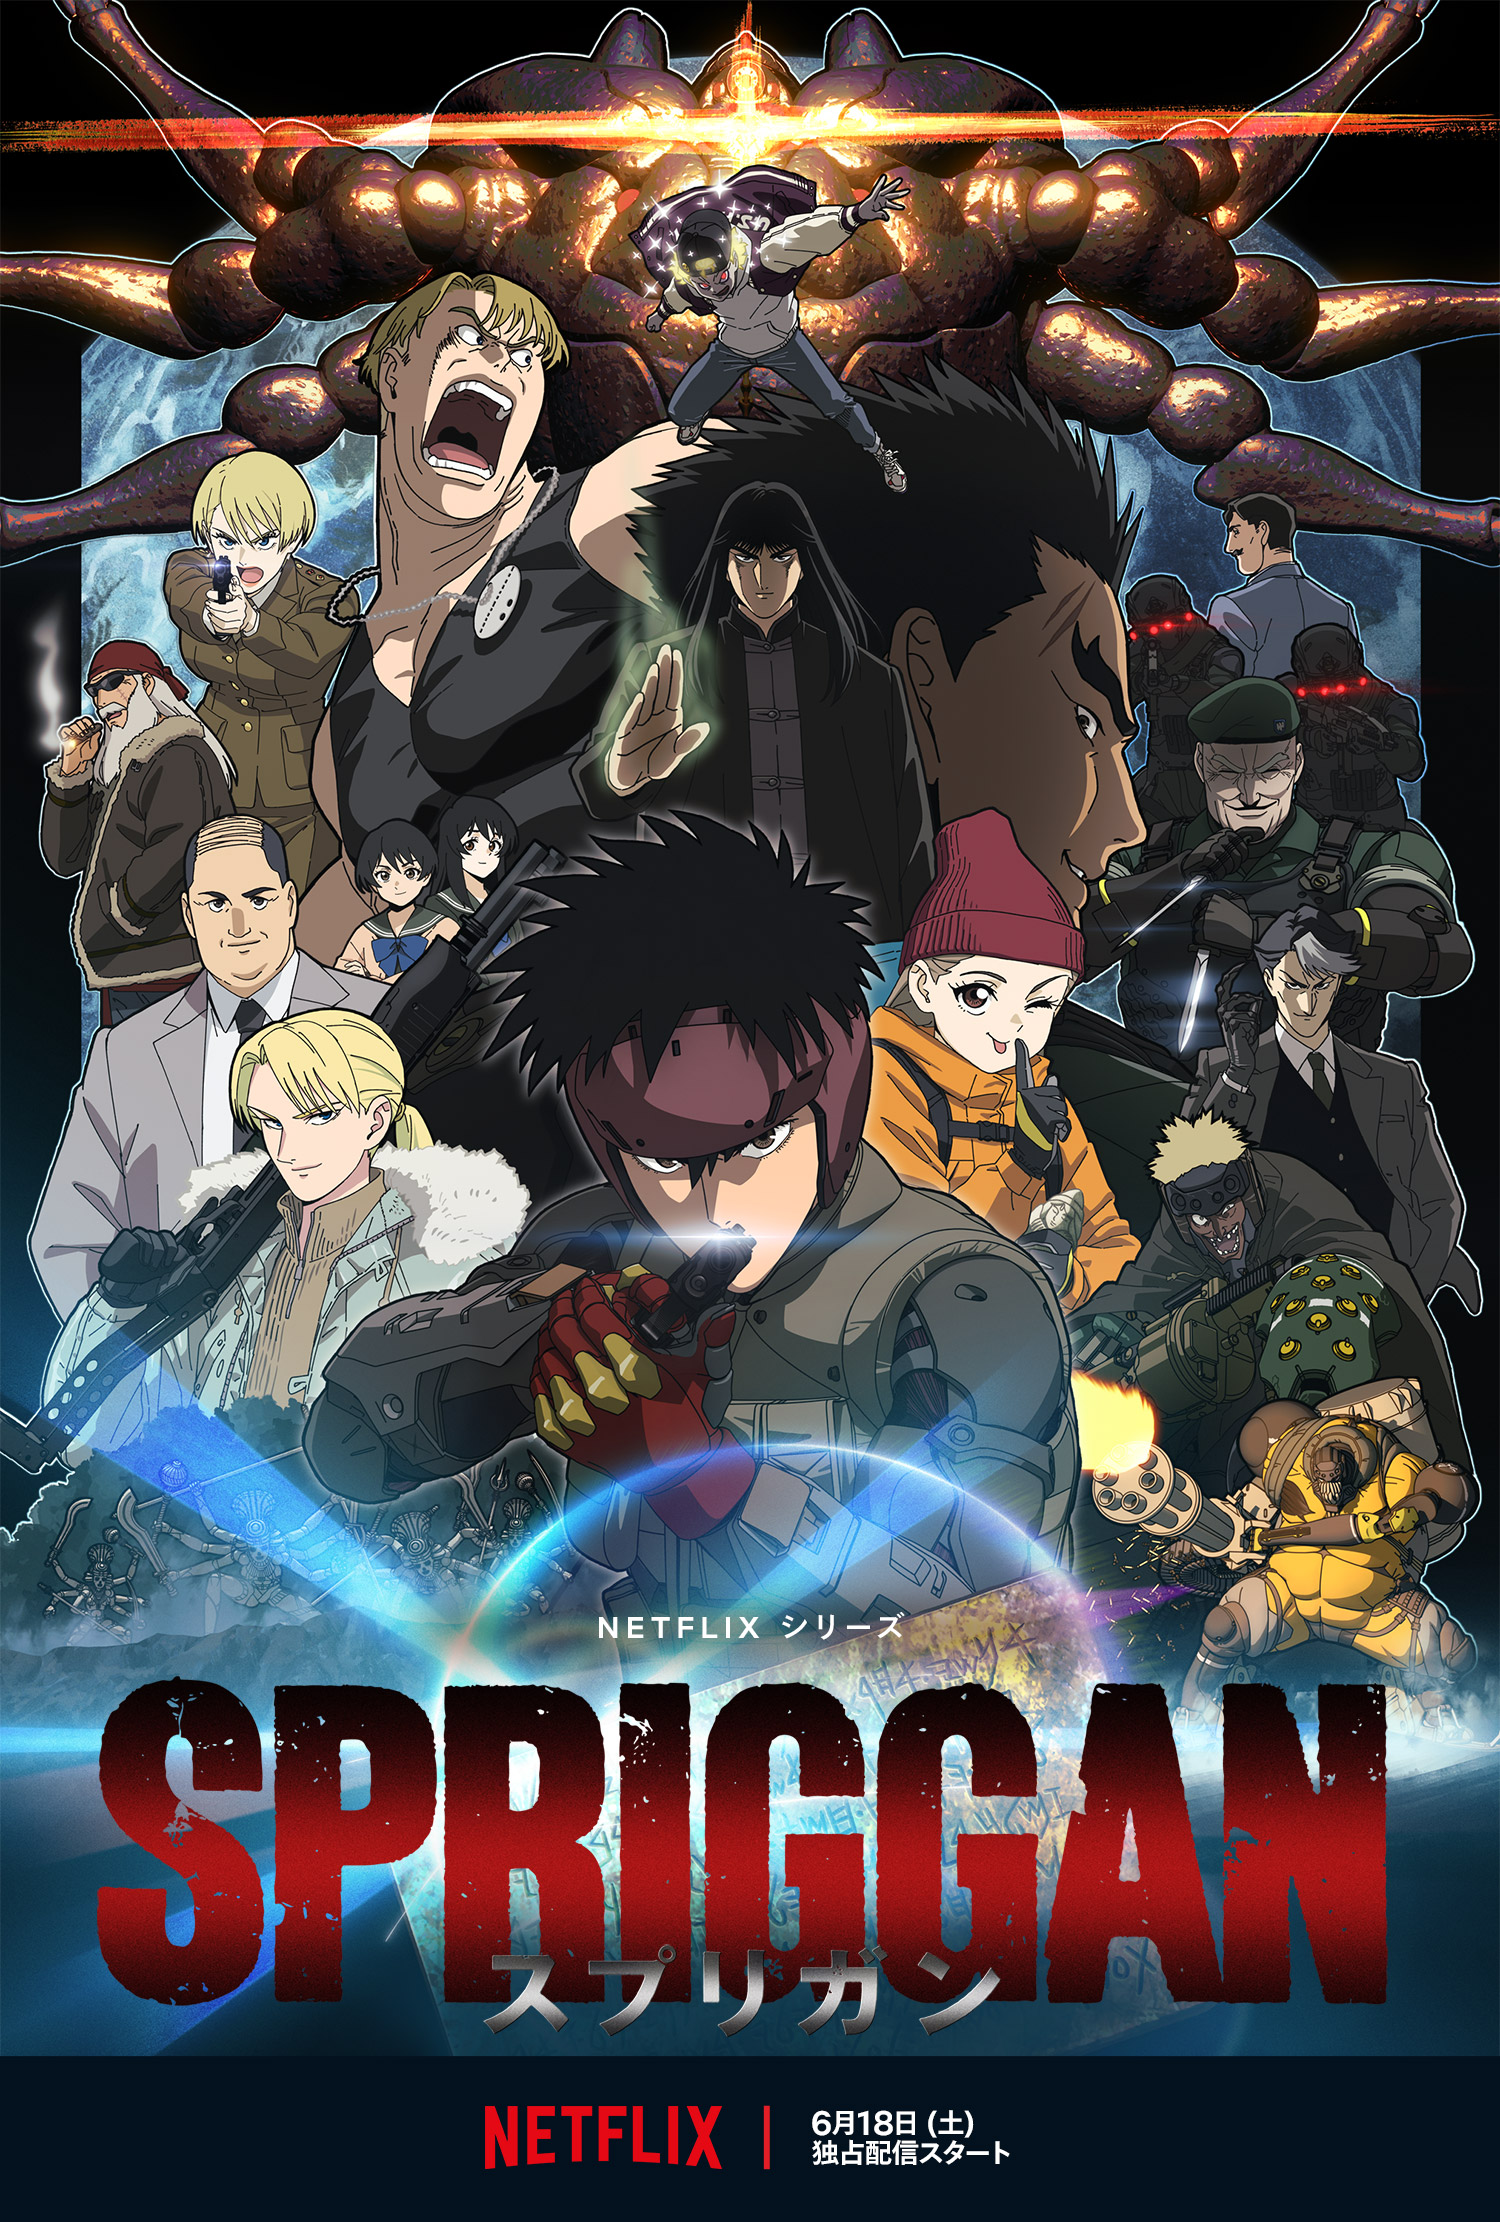 Spriggan anime key visual